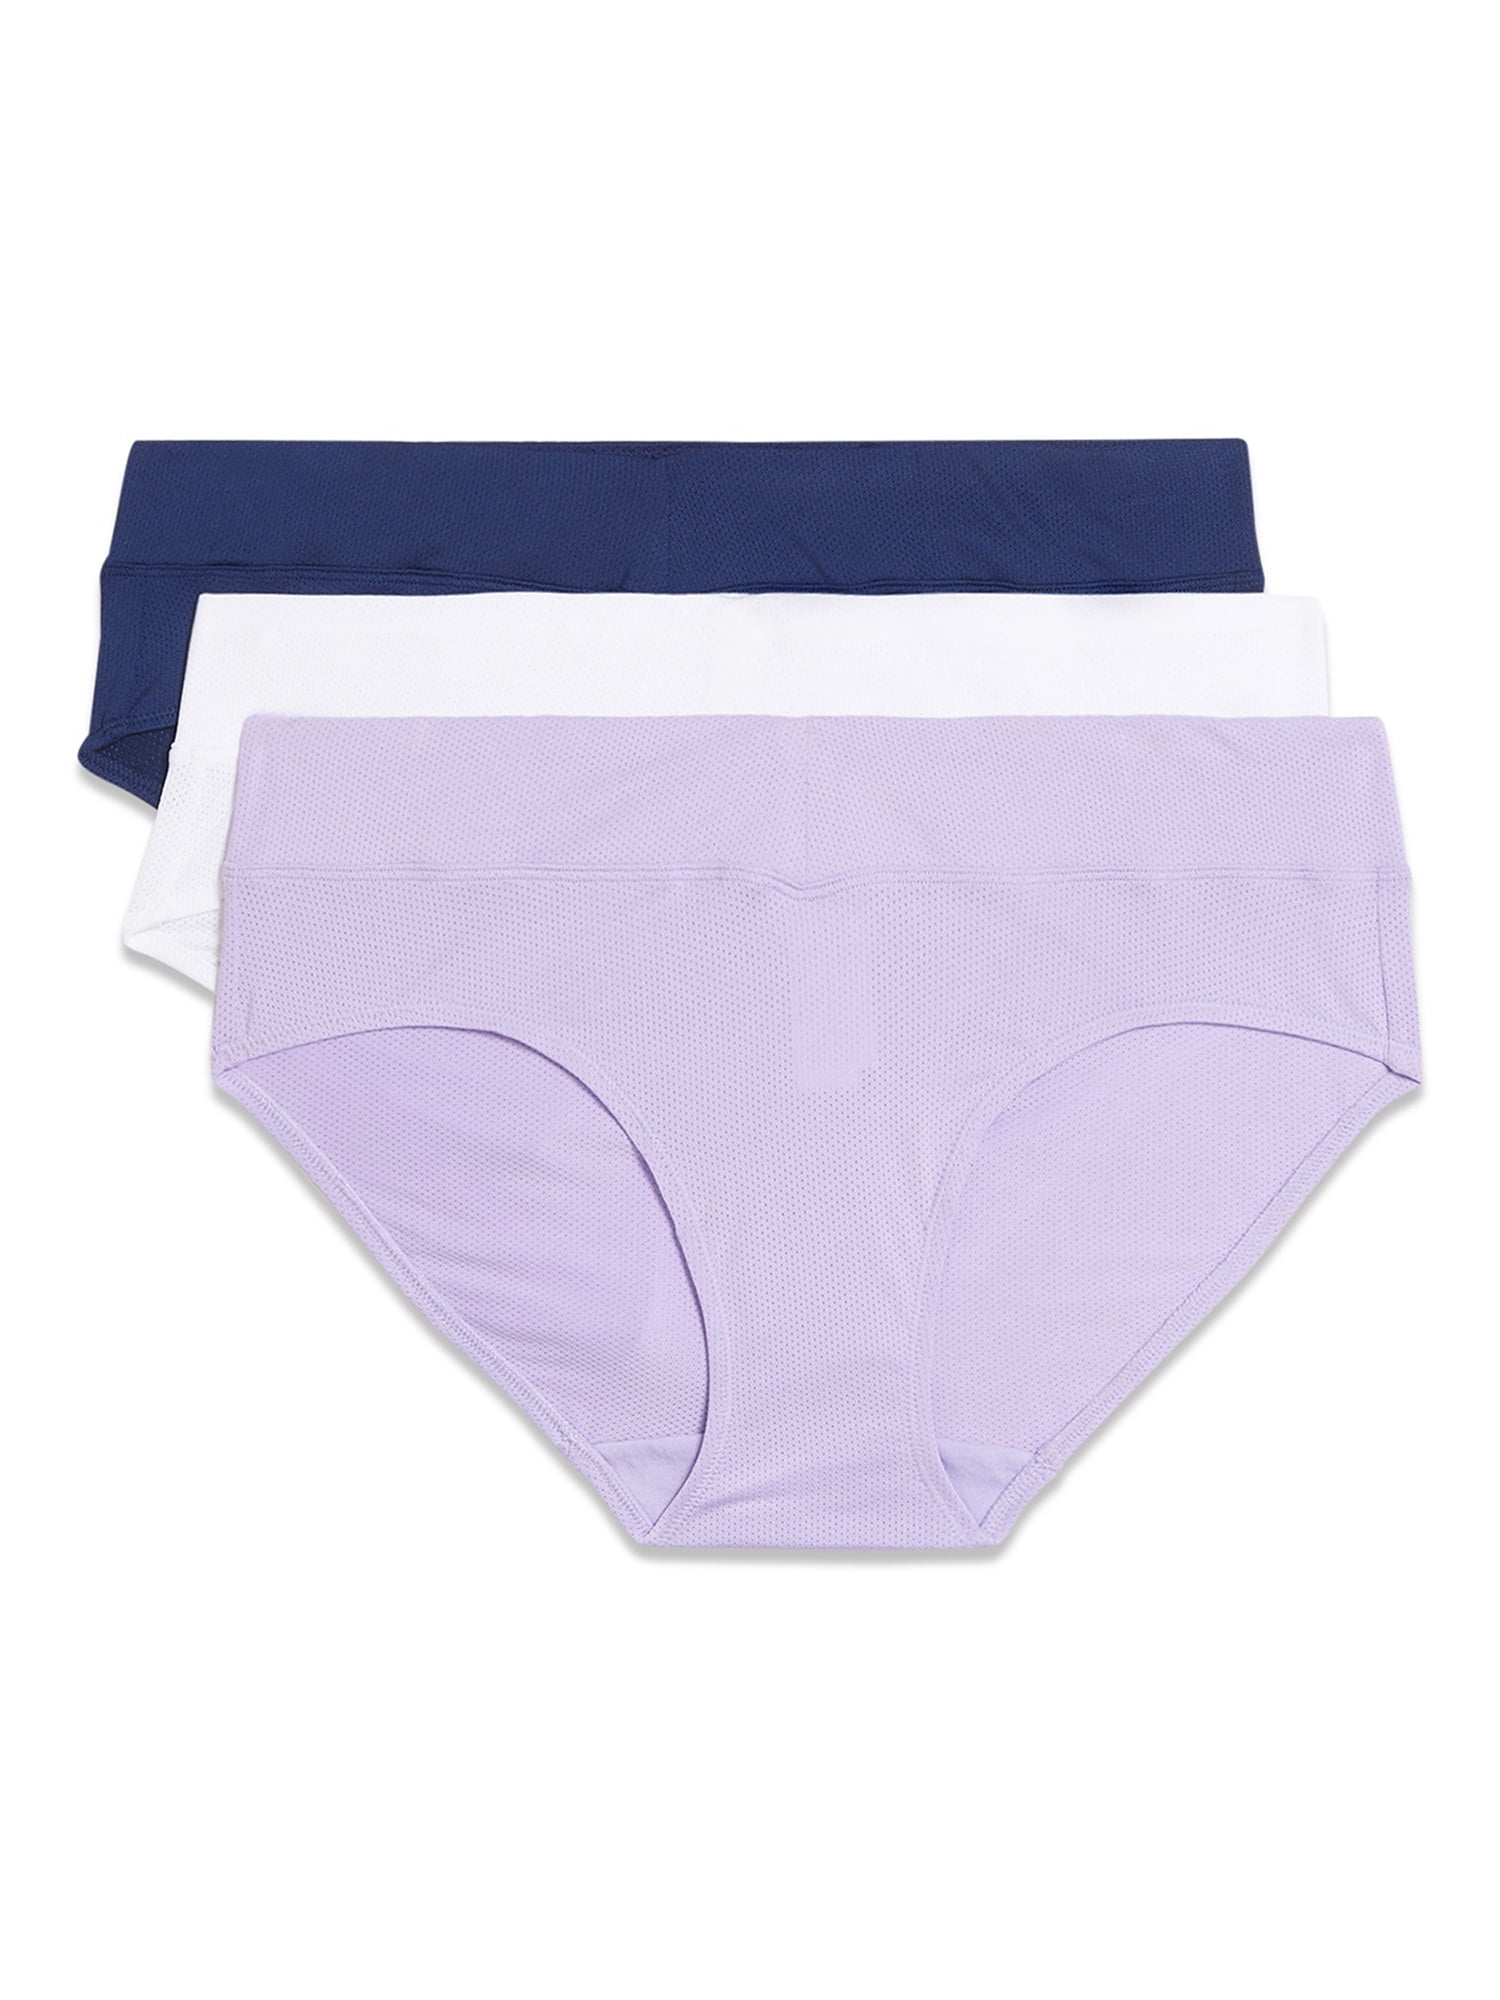 3pk NWT 3XL//10 Warner’s Blissful Benefit No Muffin Top Panties Underwear Hipster